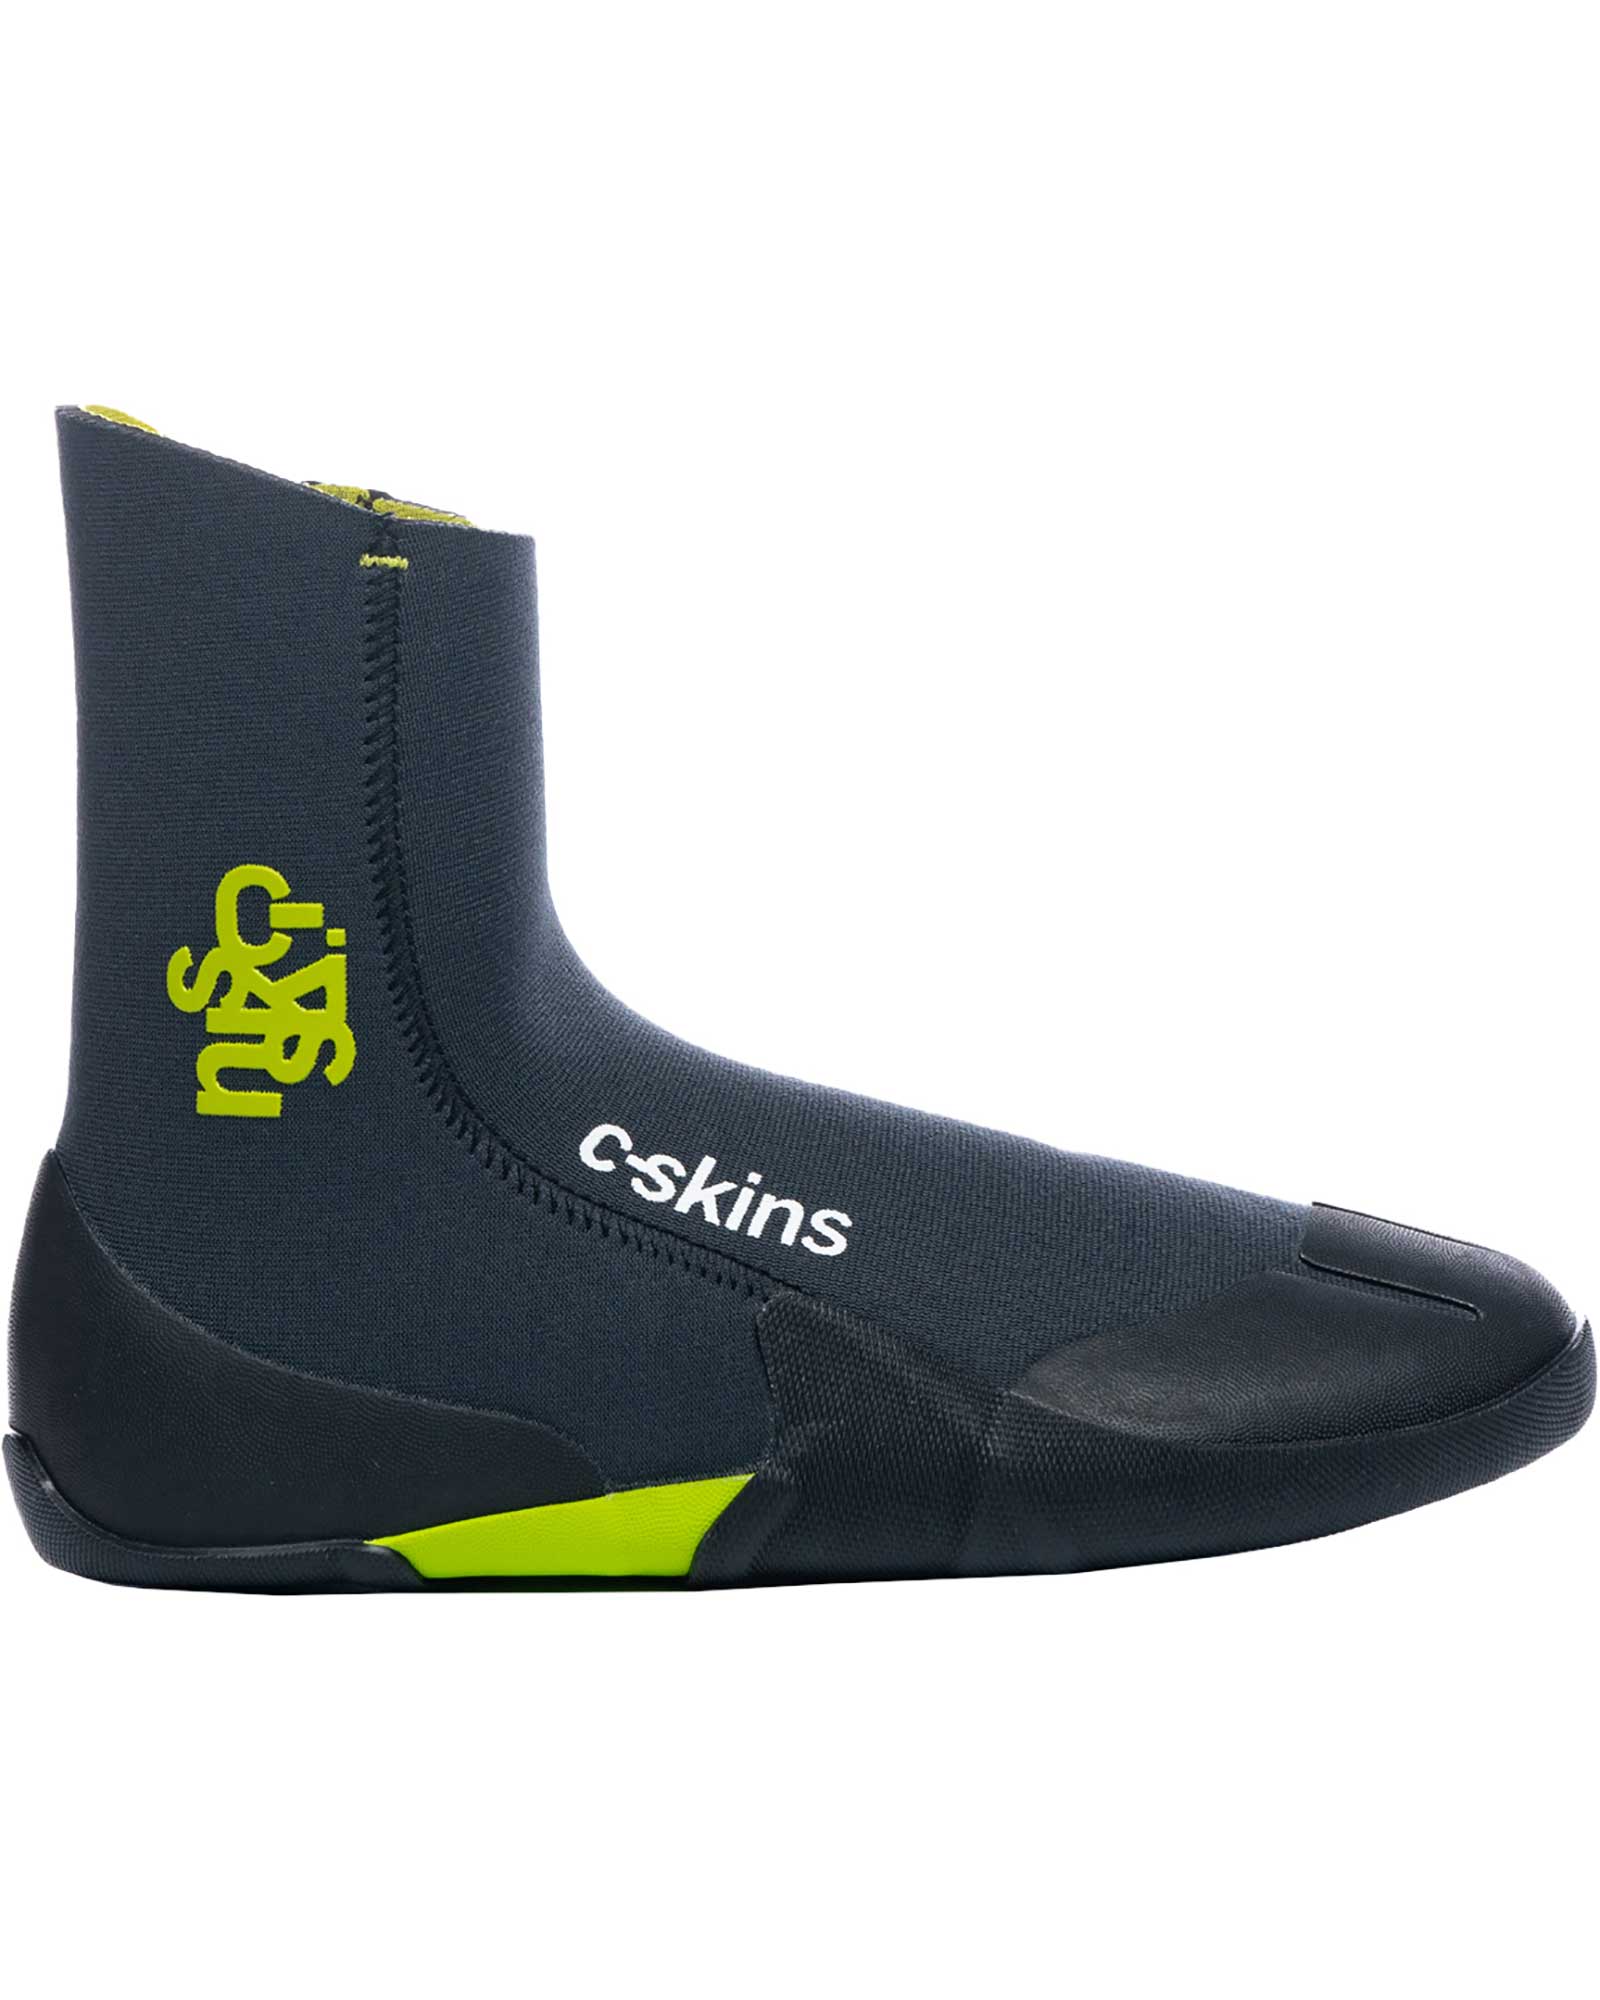 C Skins Legend 3.5mm Zipped Kids’ Boots - Graphite/Flash Green/Black M